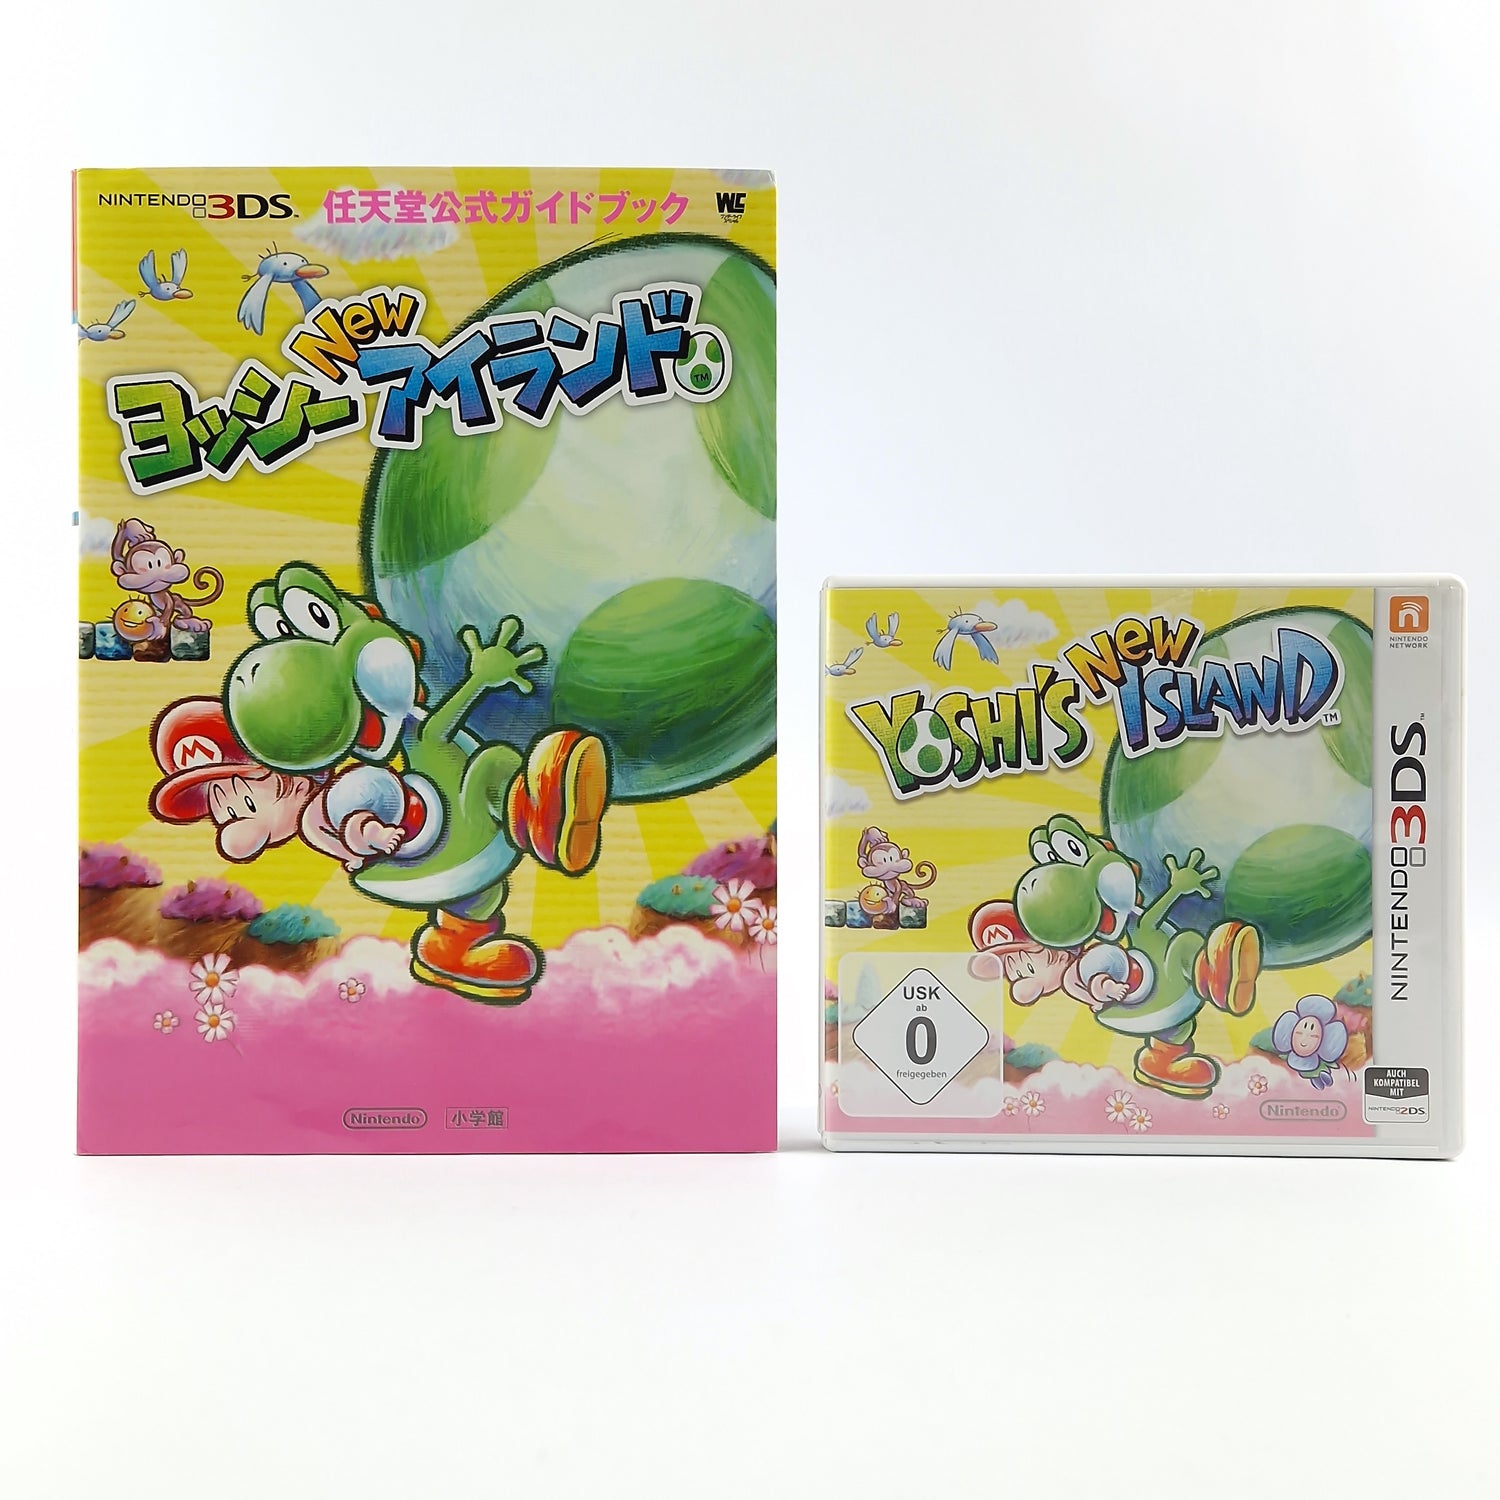 Nintendo 3DS game: Yoshi's New island + JAPAN guide - original packaging instructions